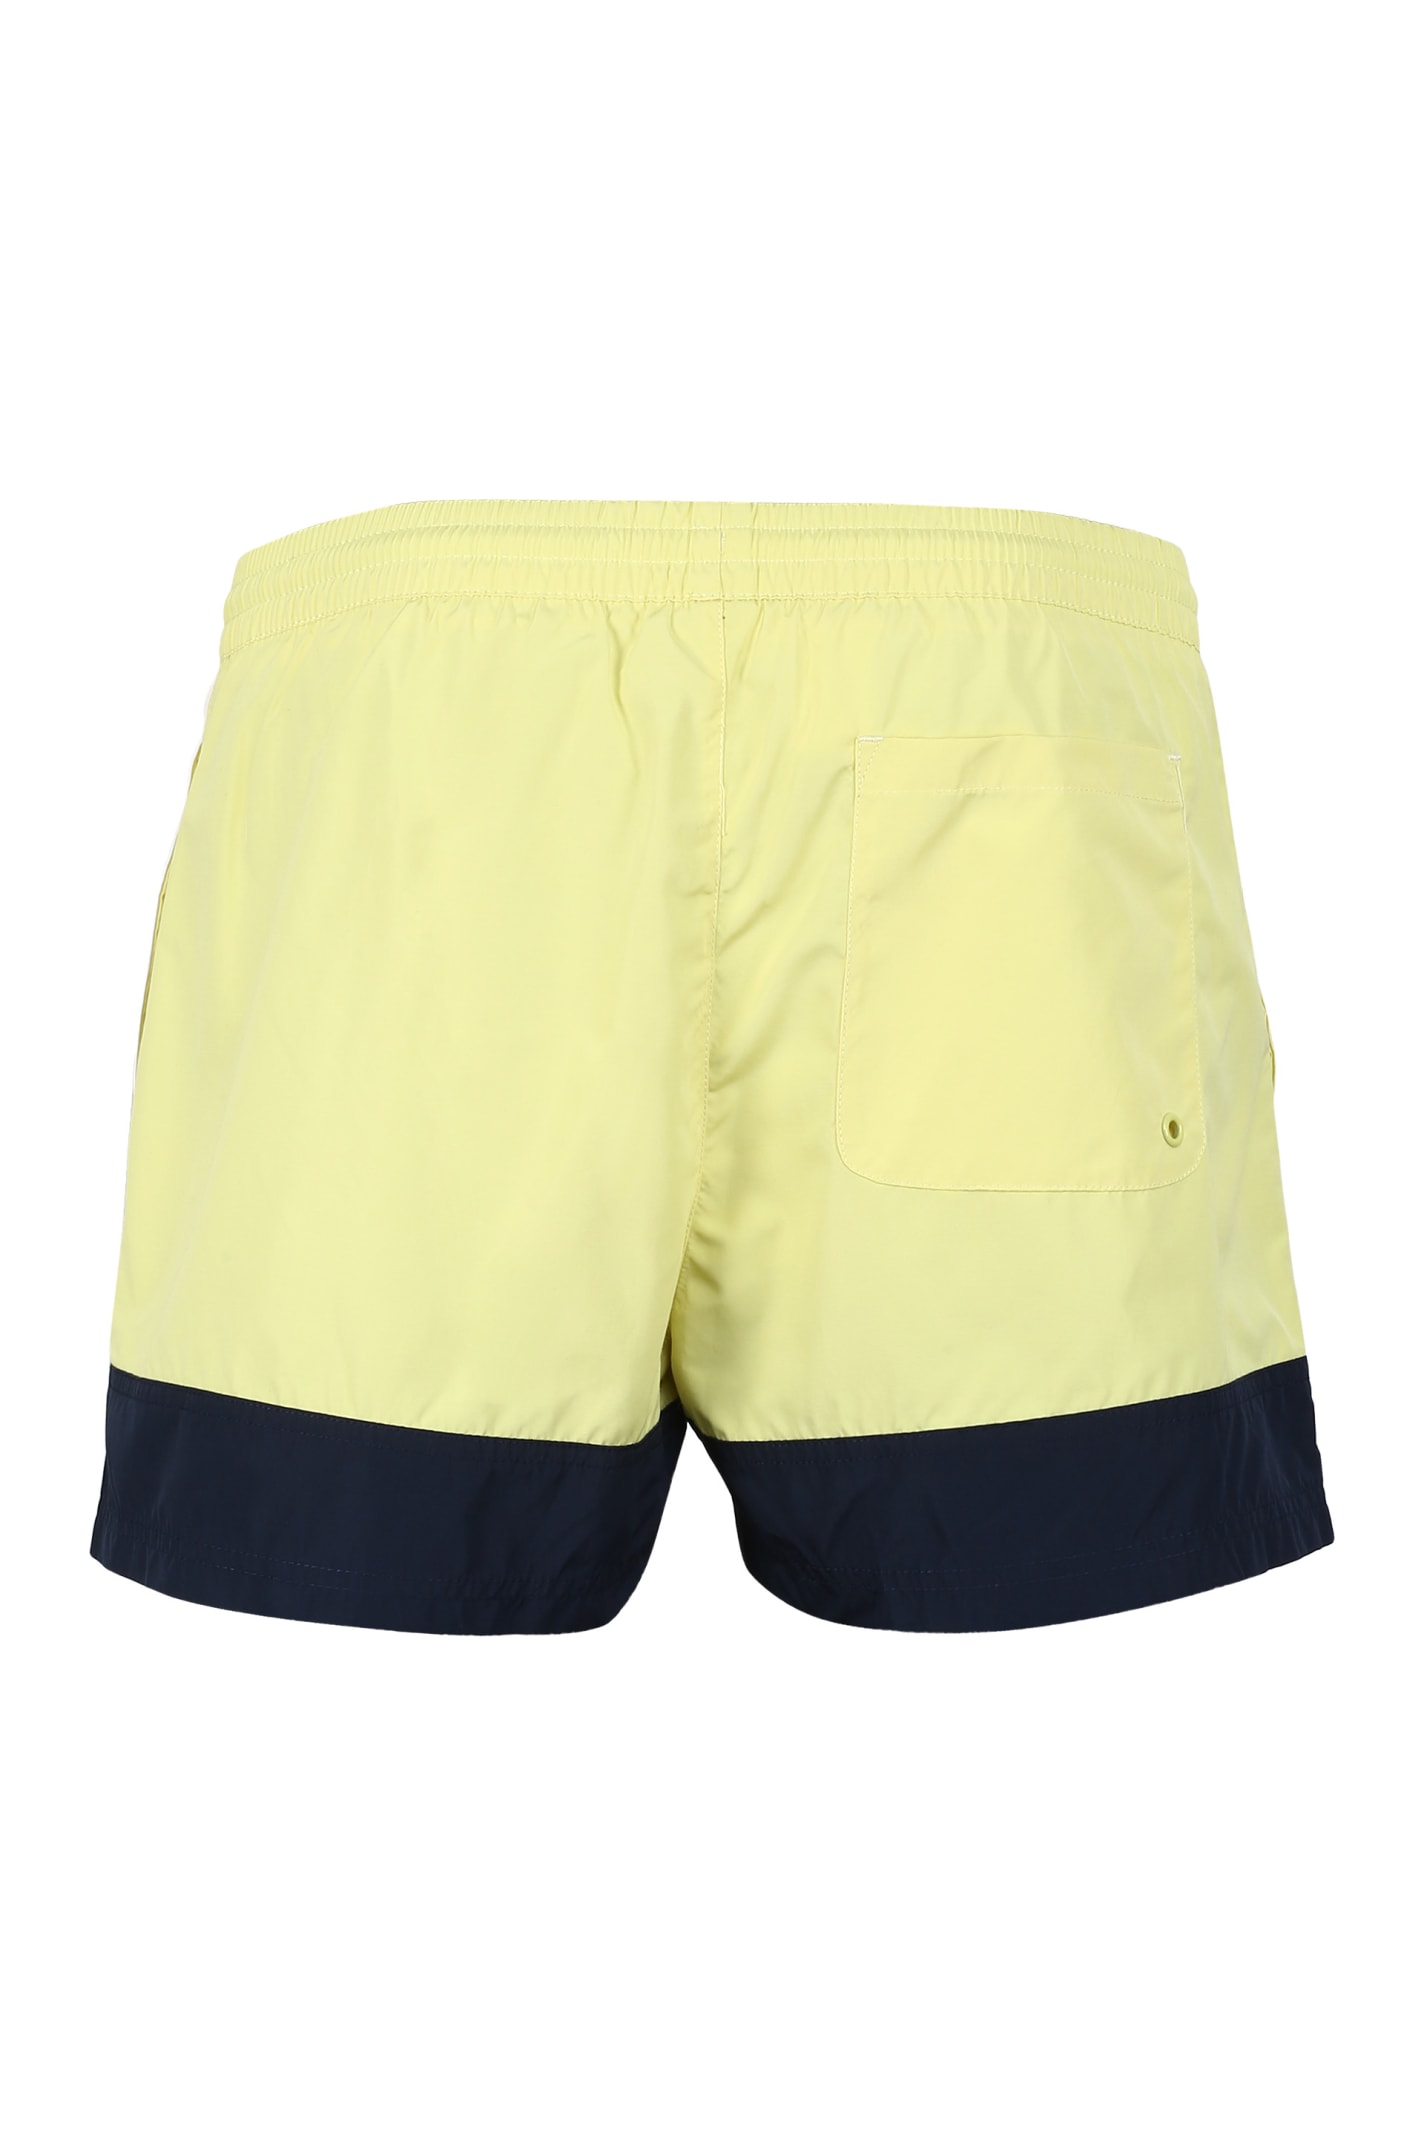 yellow fila shorts